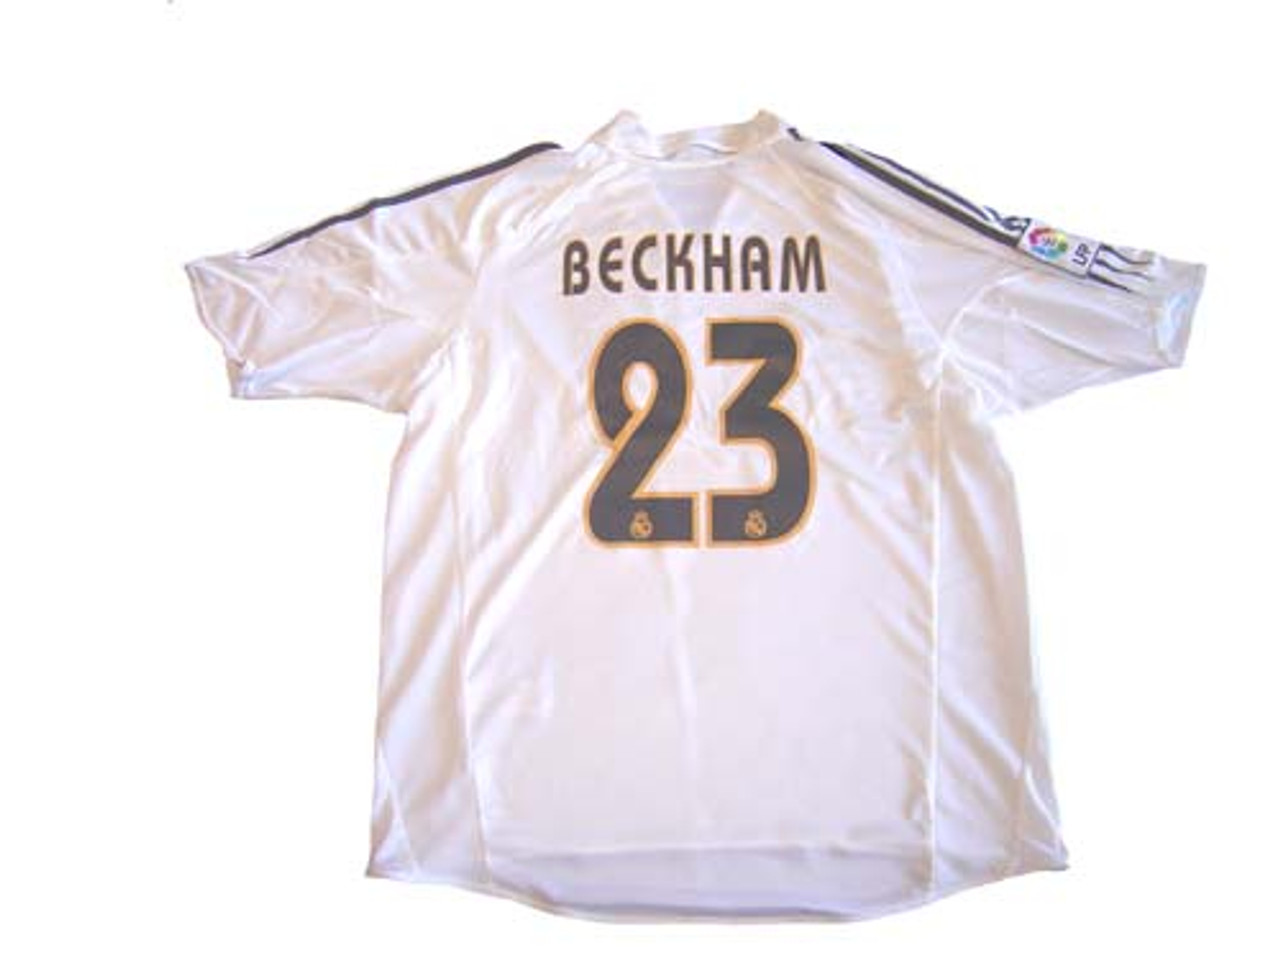 beckham real madrid jersey